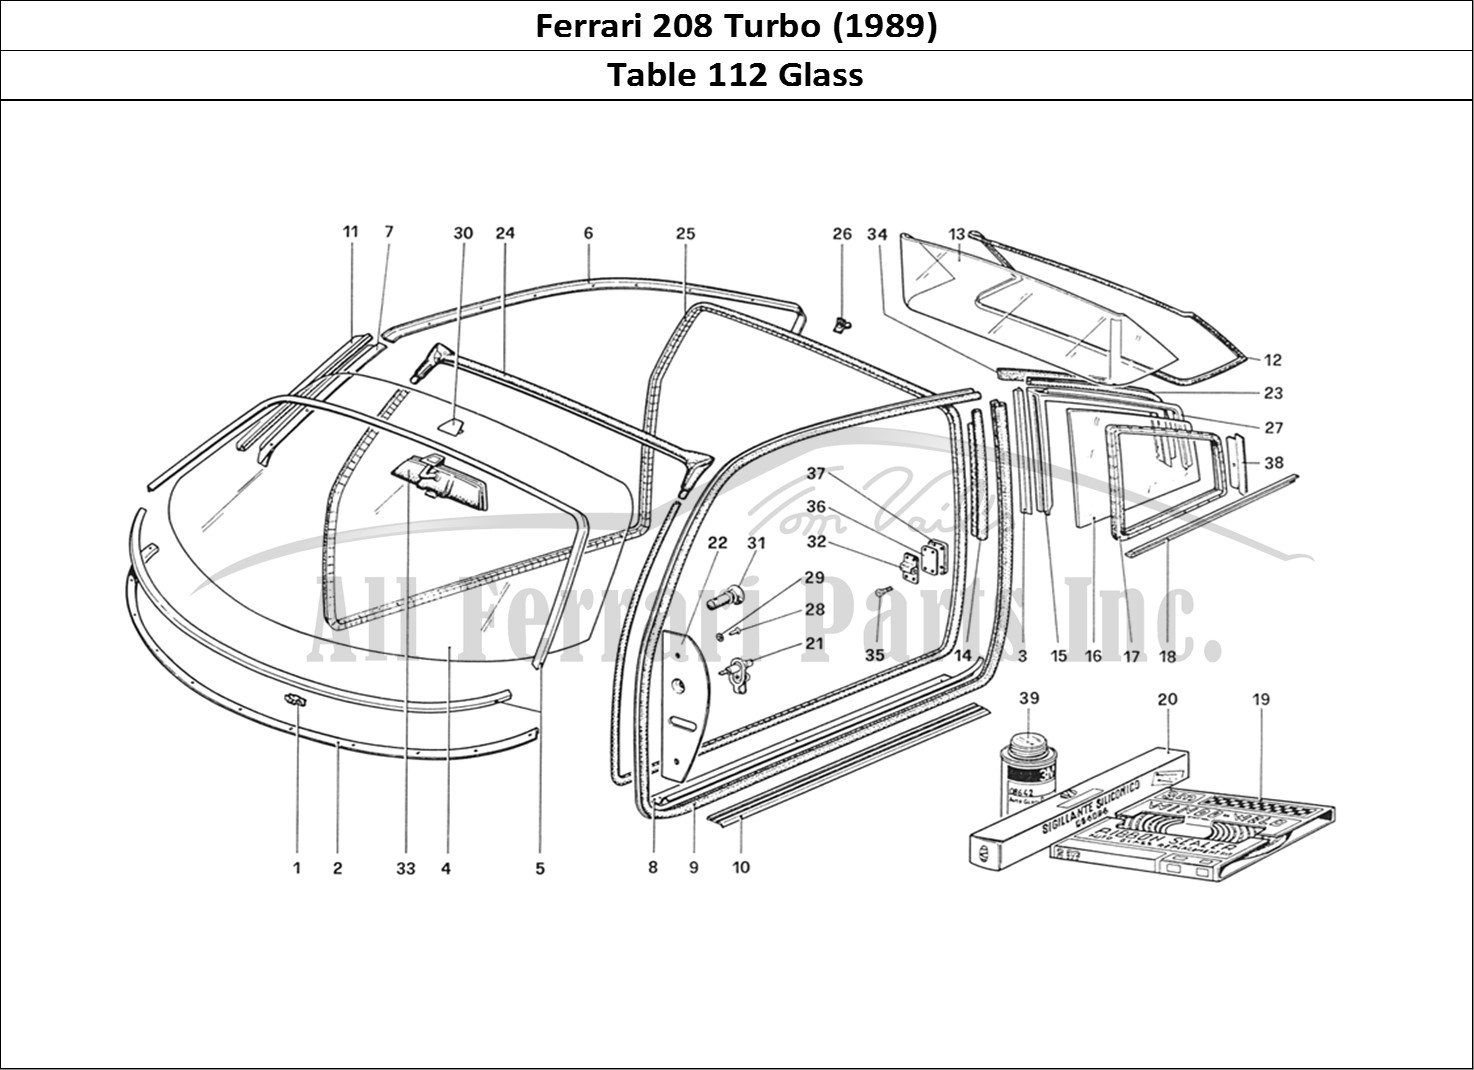 Ferrari Parts Ferrari 208 Turbo (1989) Page 112 Glasses